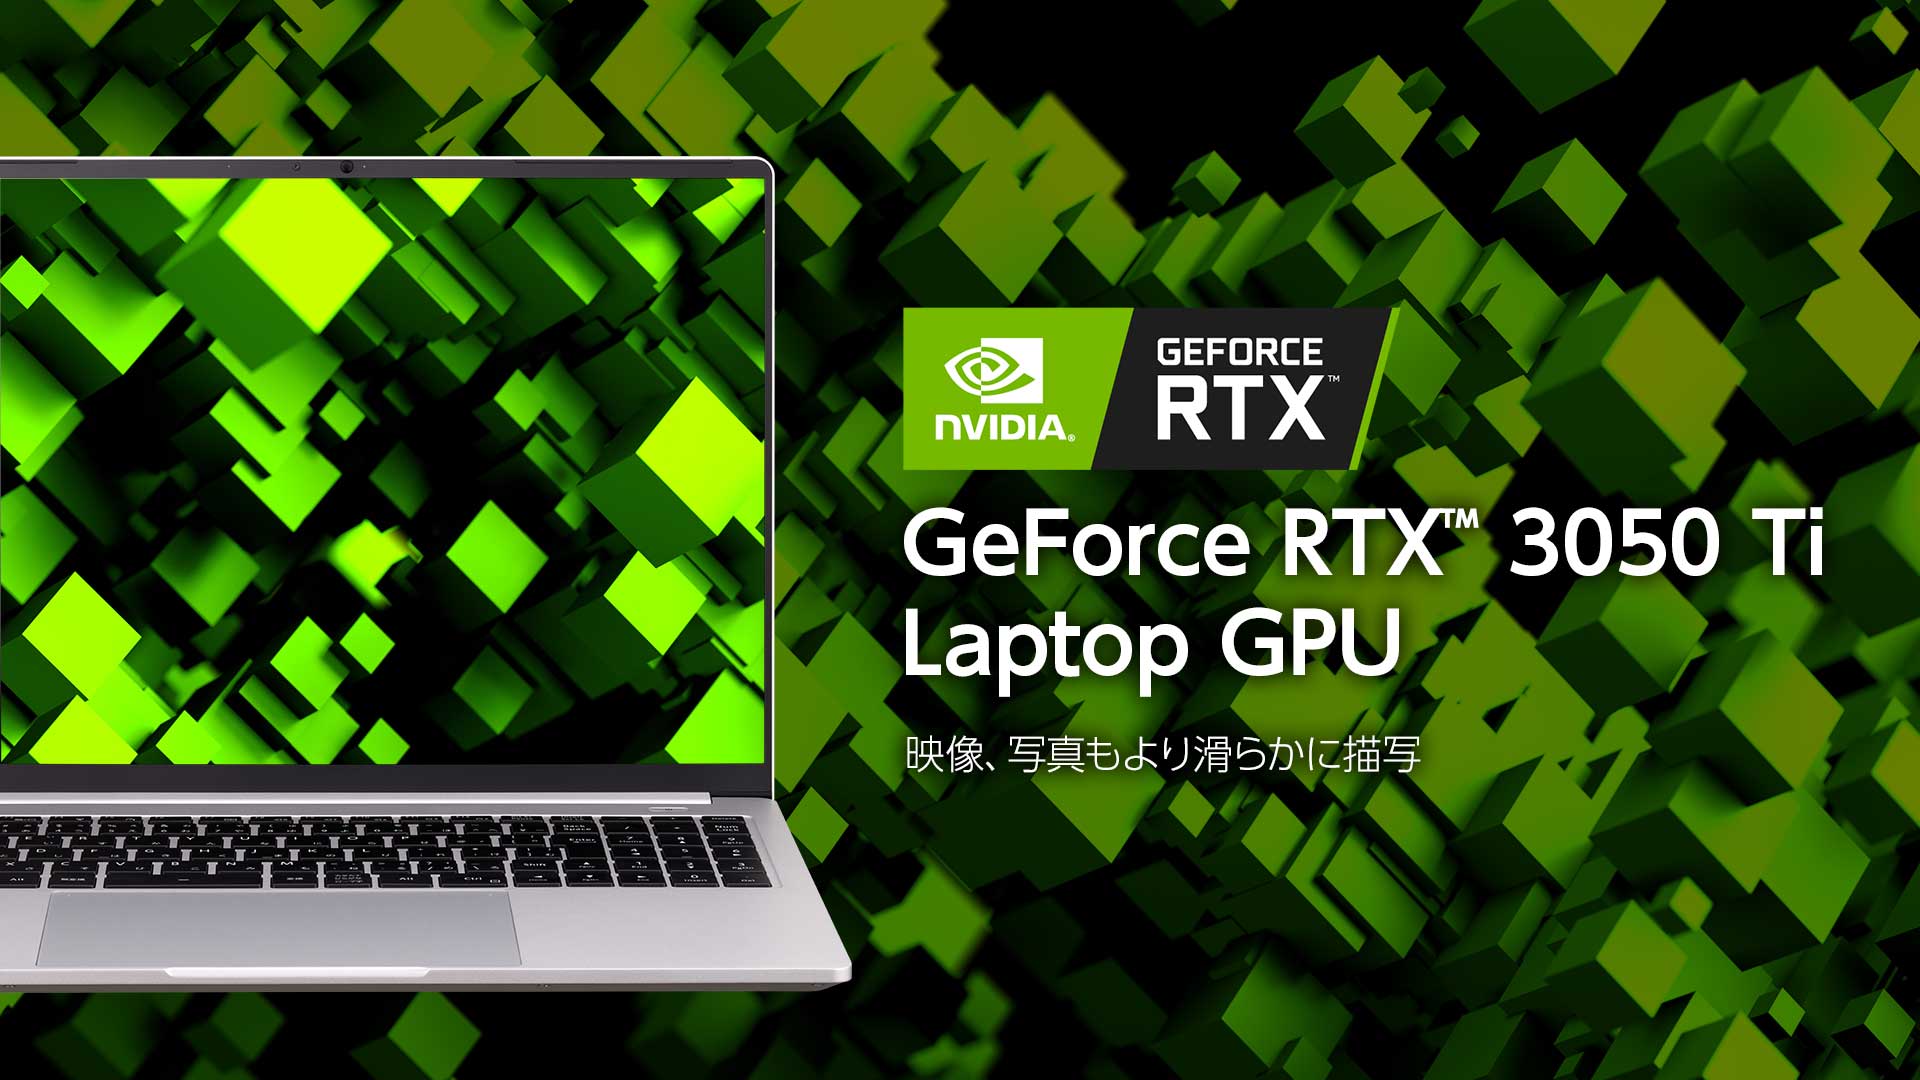 NVIDIA GeForce RTX 3050 Ti Laptop GPU